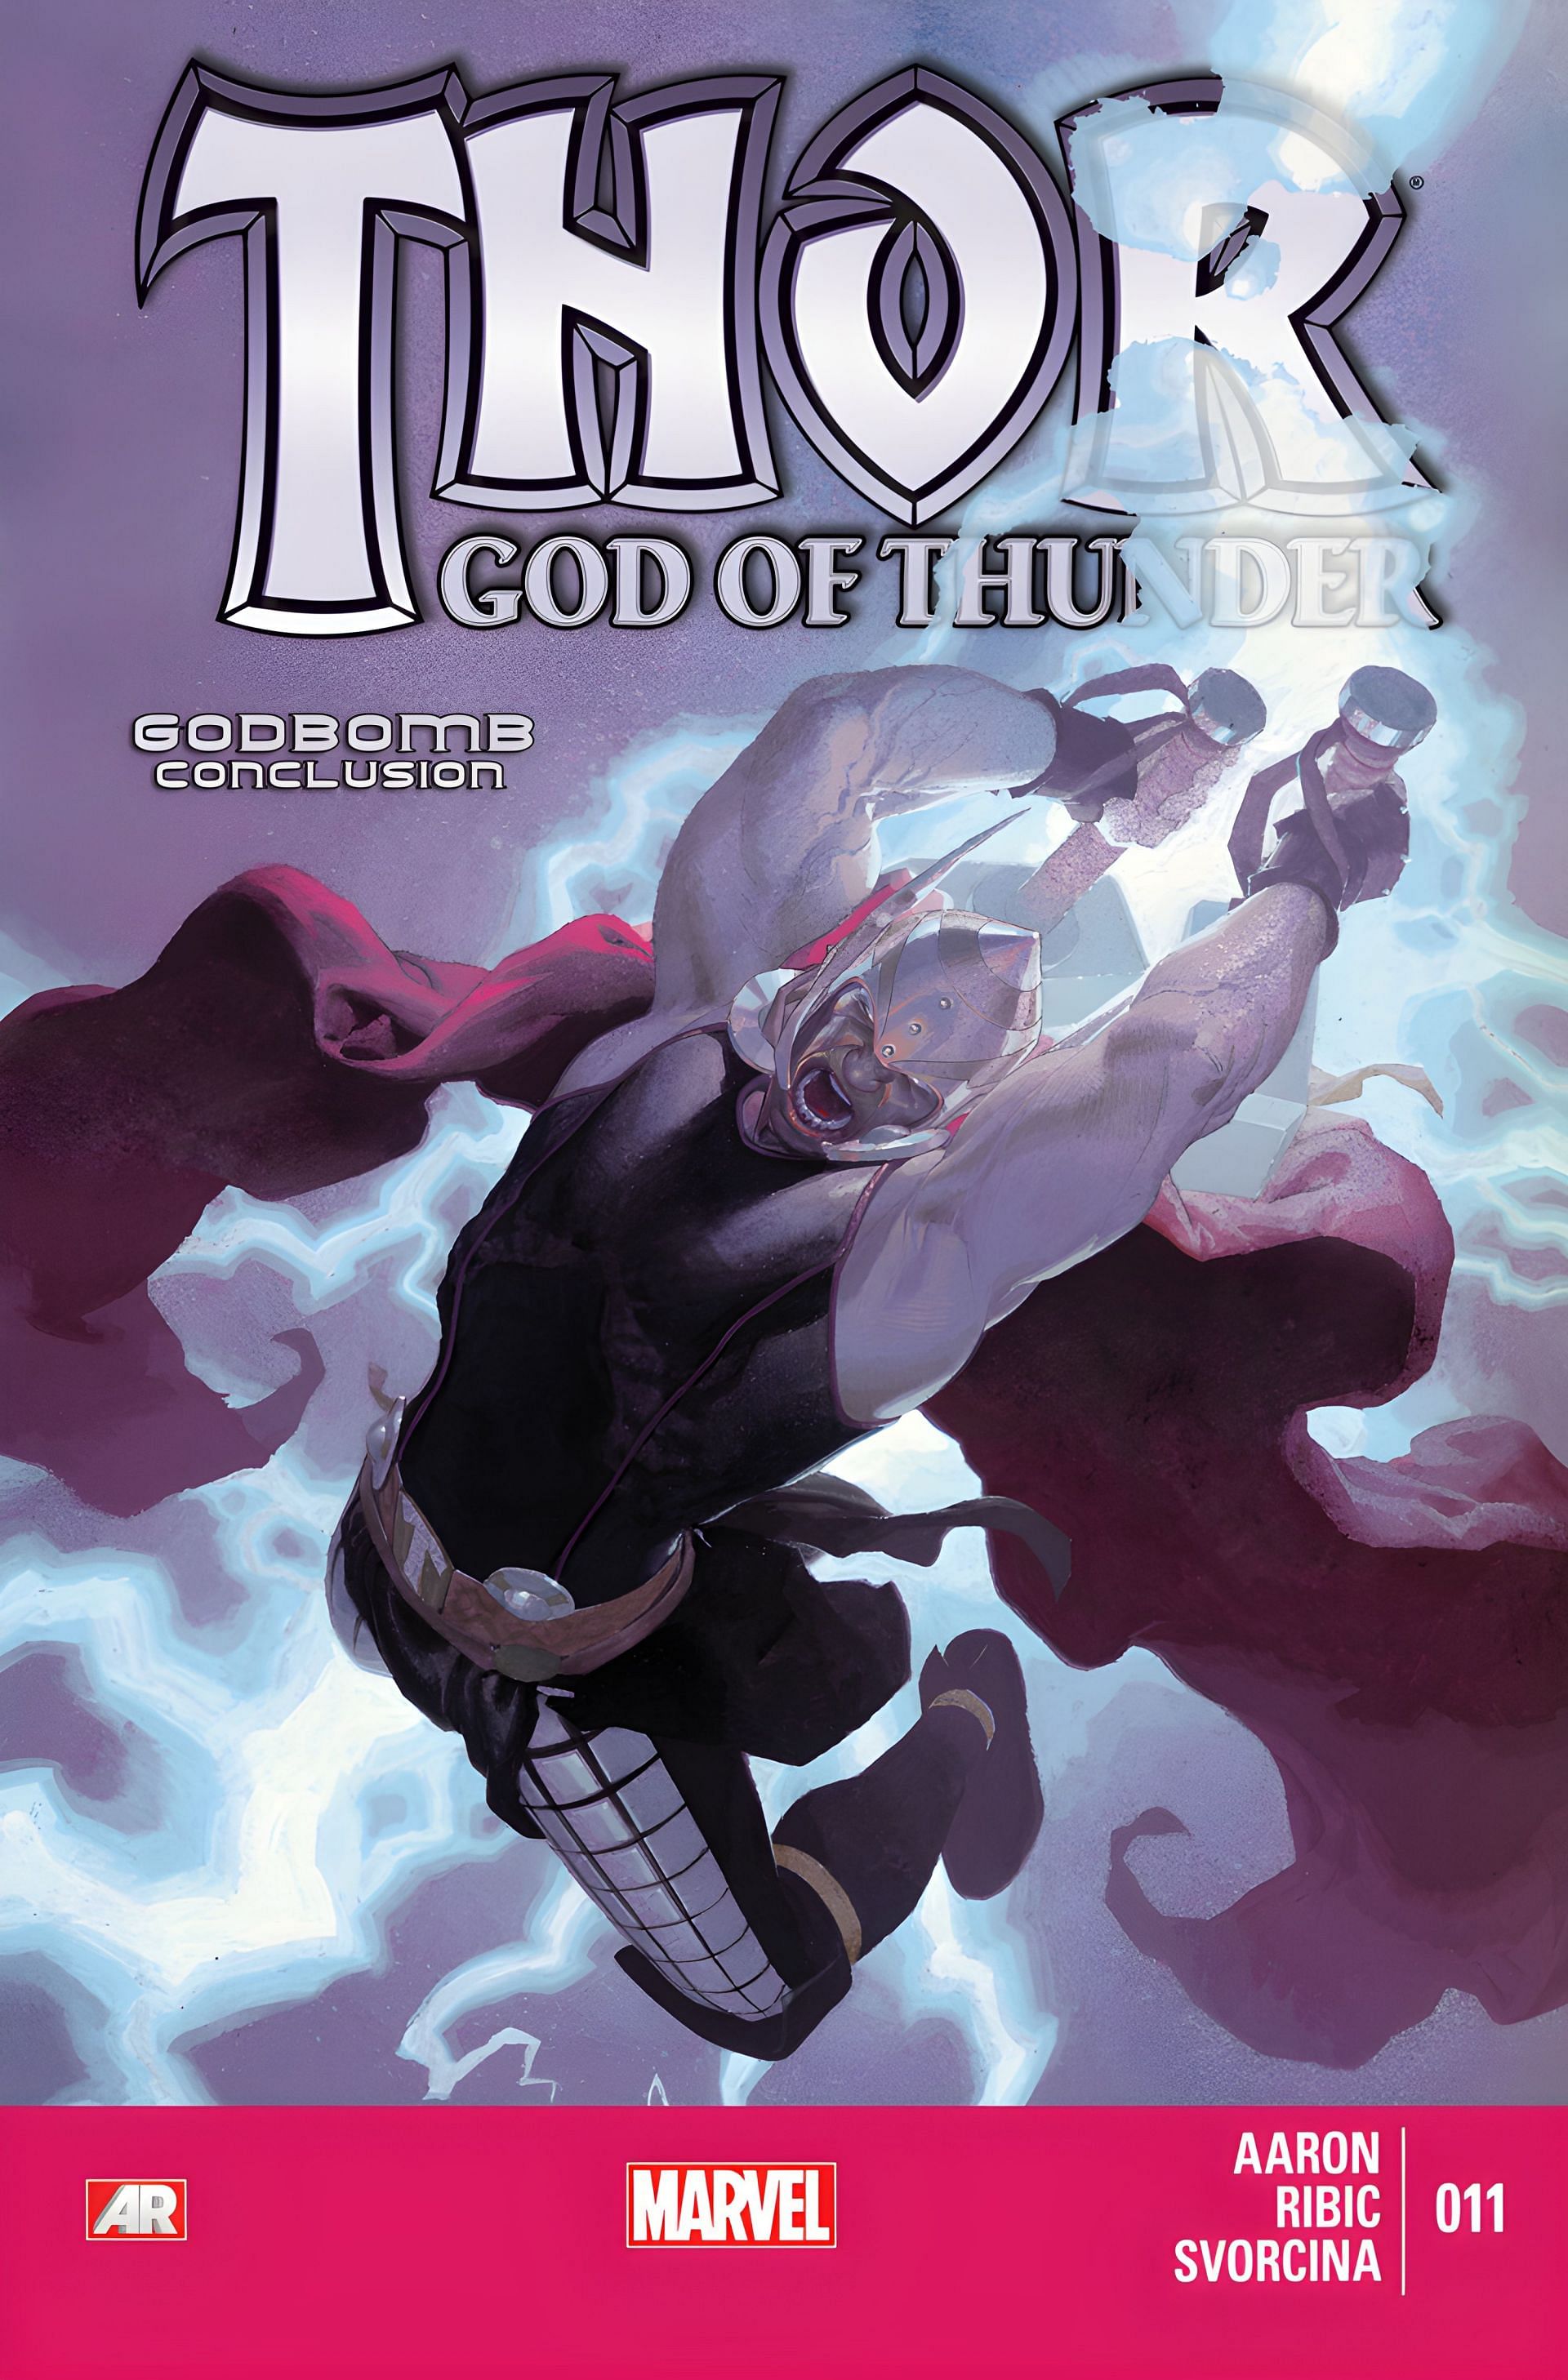 Thor: God of Thunder #11 cover (Image via Marvel Comics)